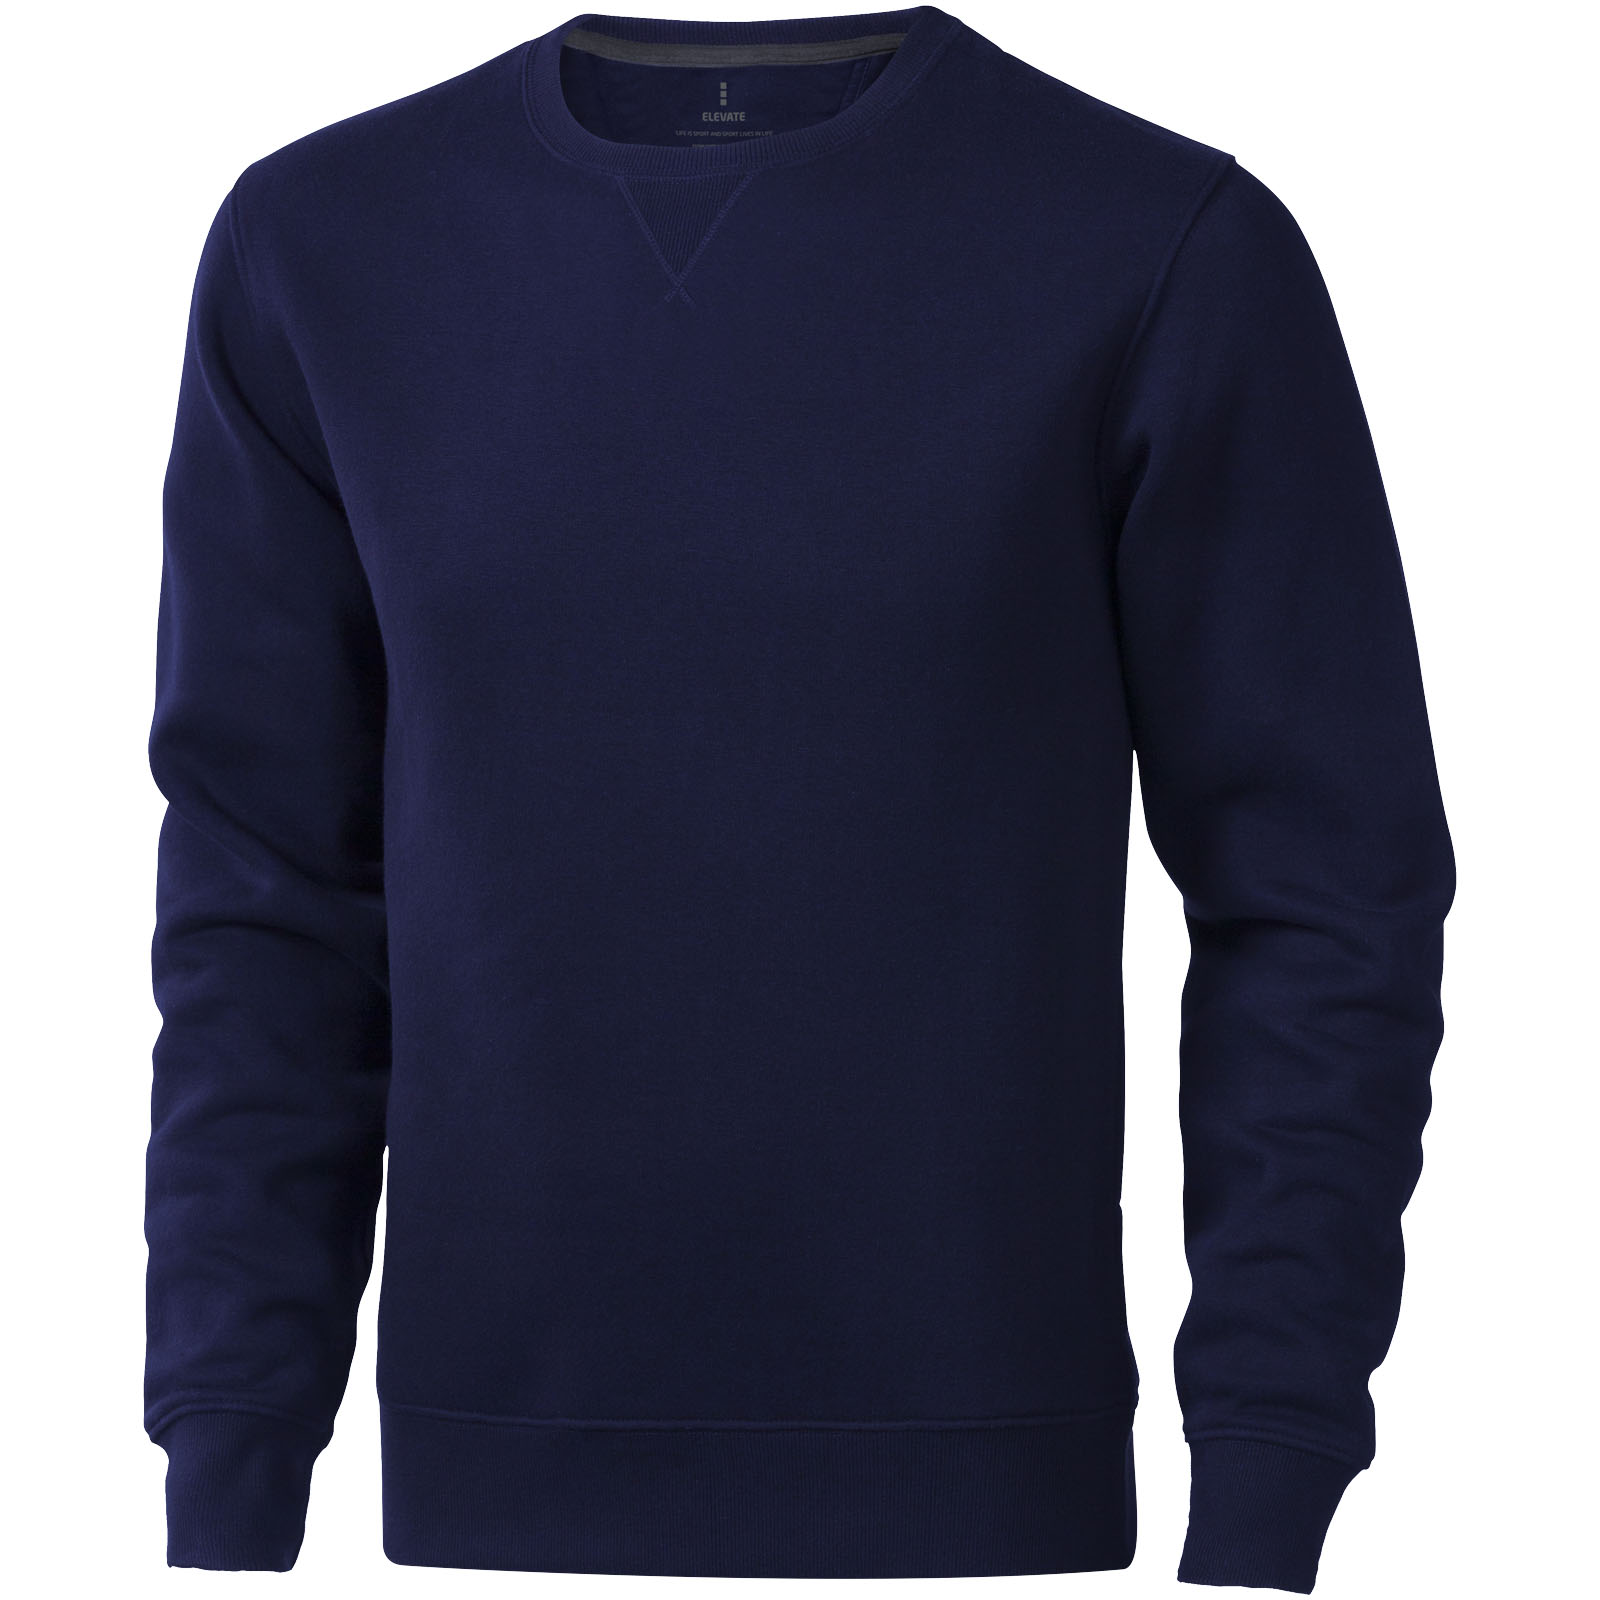 Advertising Sweaters - Surrey unisex crewneck sweater